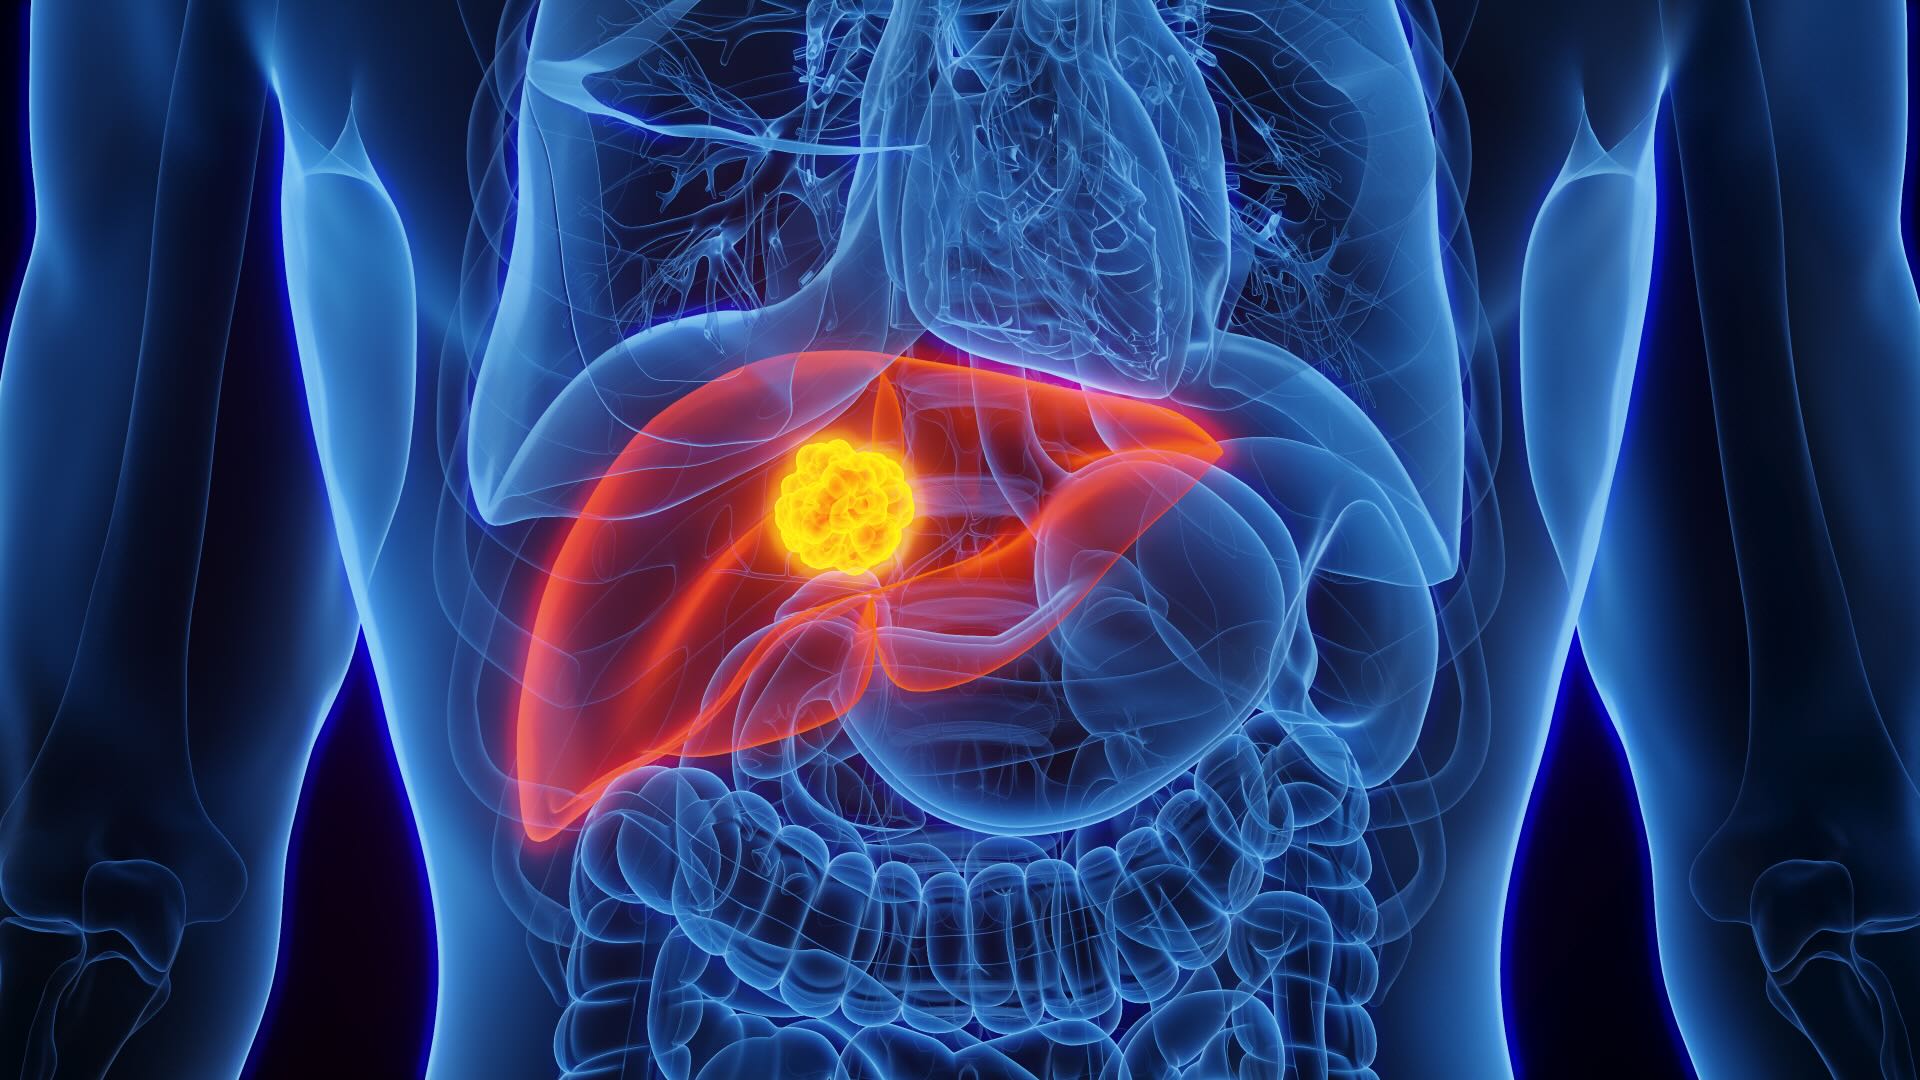 3D Rendered Medical Illustration of Male Anatomy - Liver Cancer. Plain Black Background. Close up. Anterior View